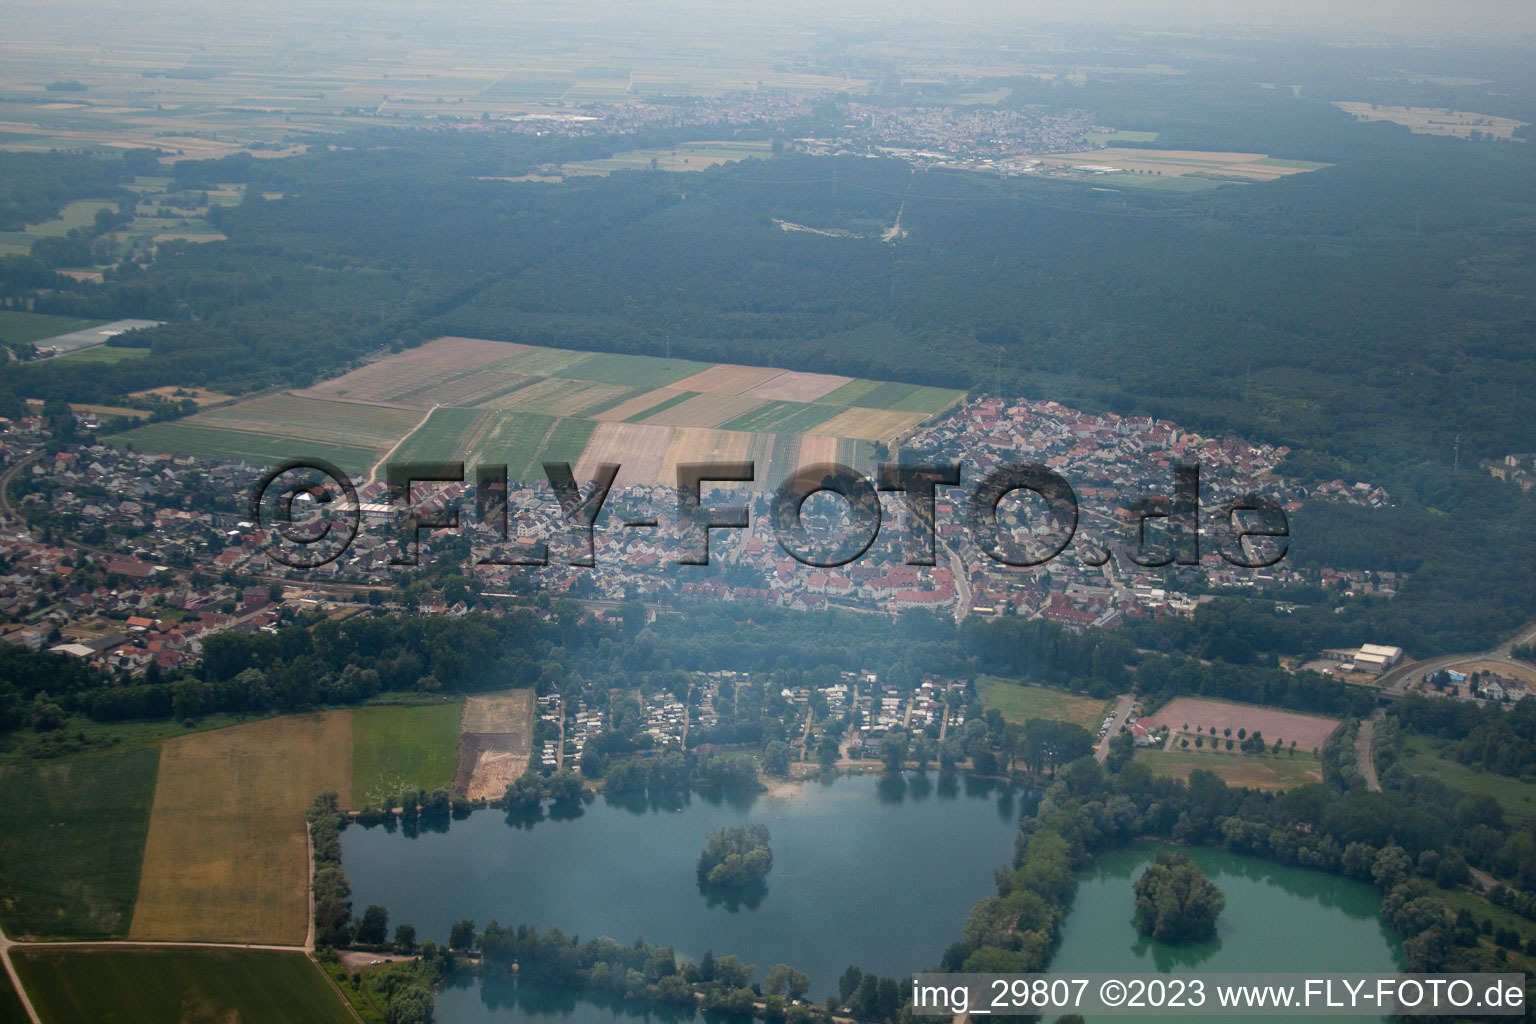 District Sondernheim in Germersheim in the state Rhineland-Palatinate, Germany seen from above